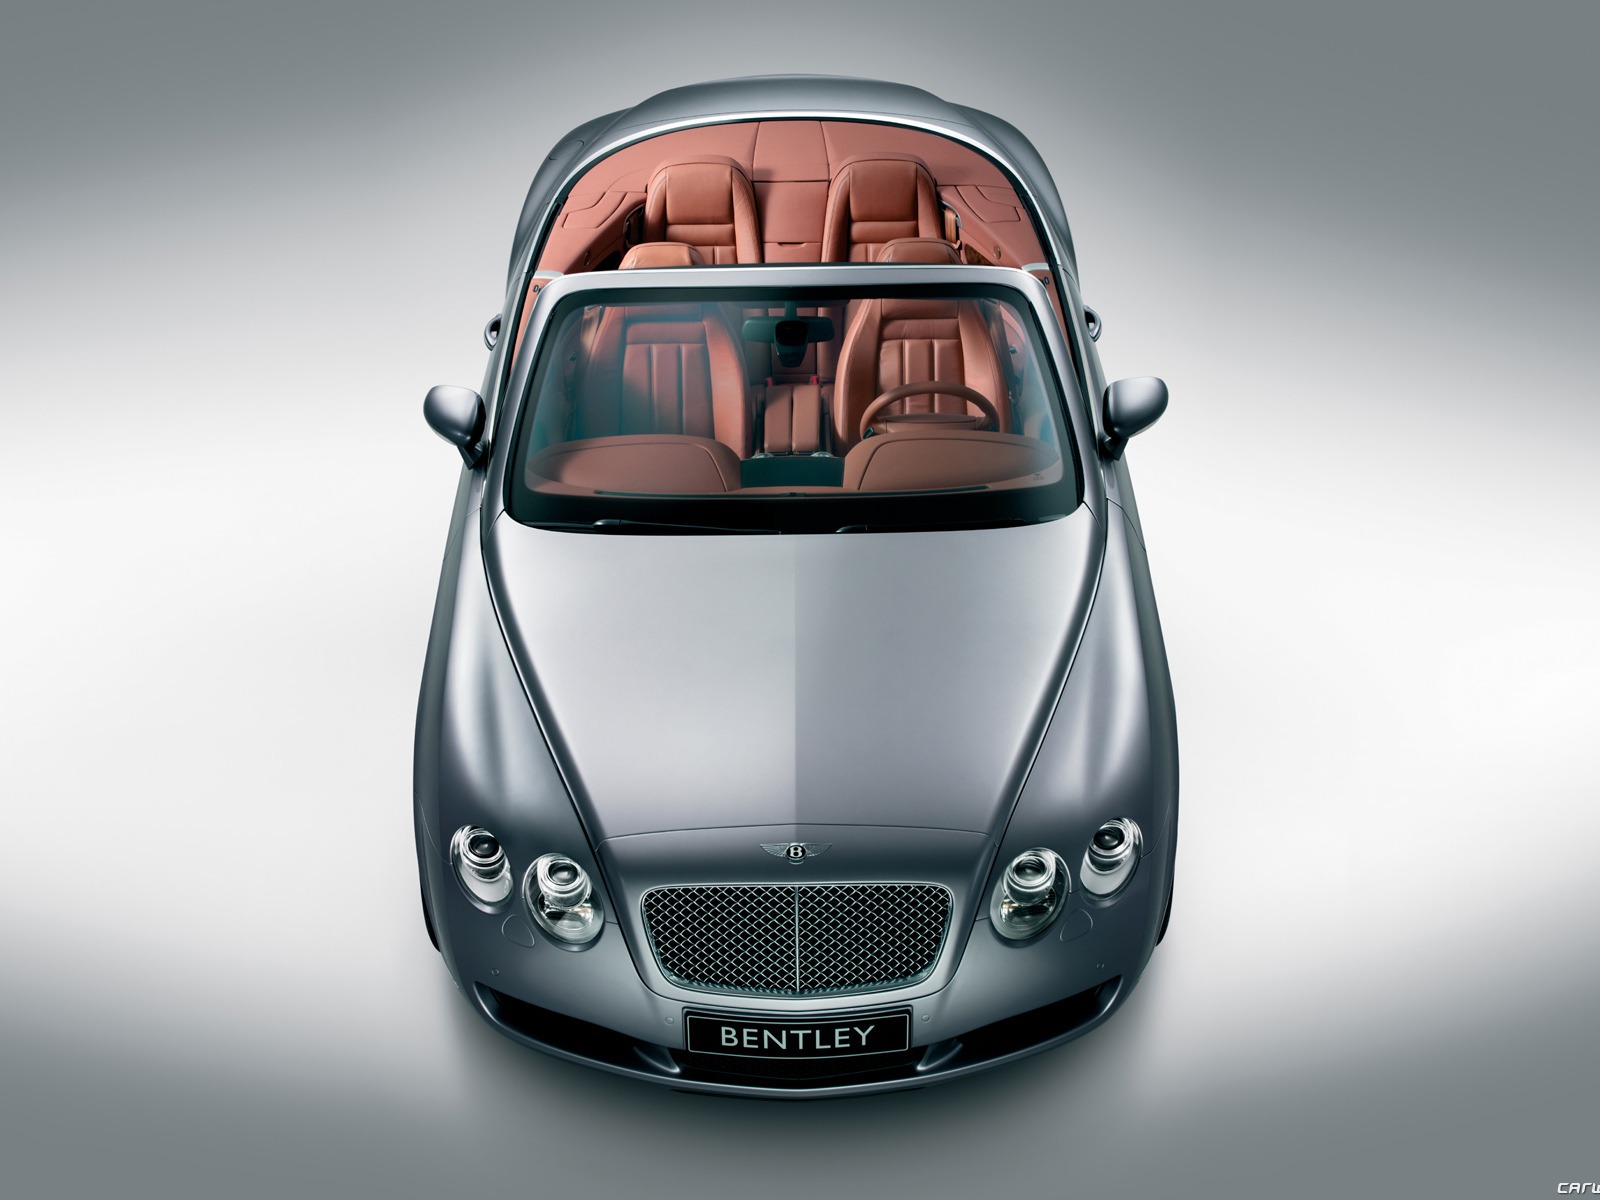 Bentley Continental GTC - 2006 賓利 #21 - 1600x1200